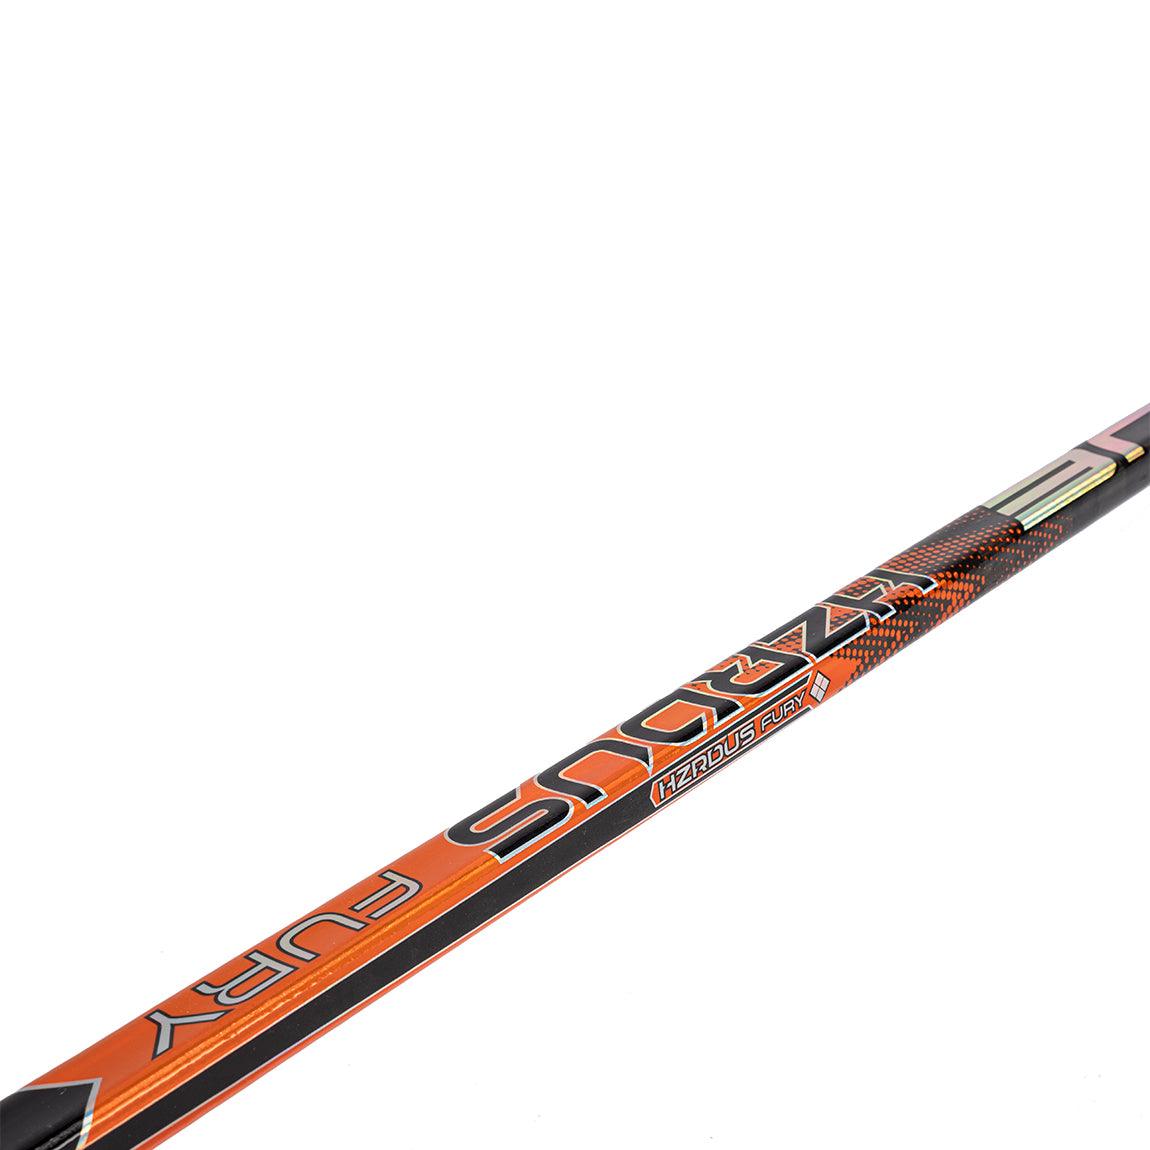 HZRDUS Fury Hockey Stick - Senior - Sports Excellence